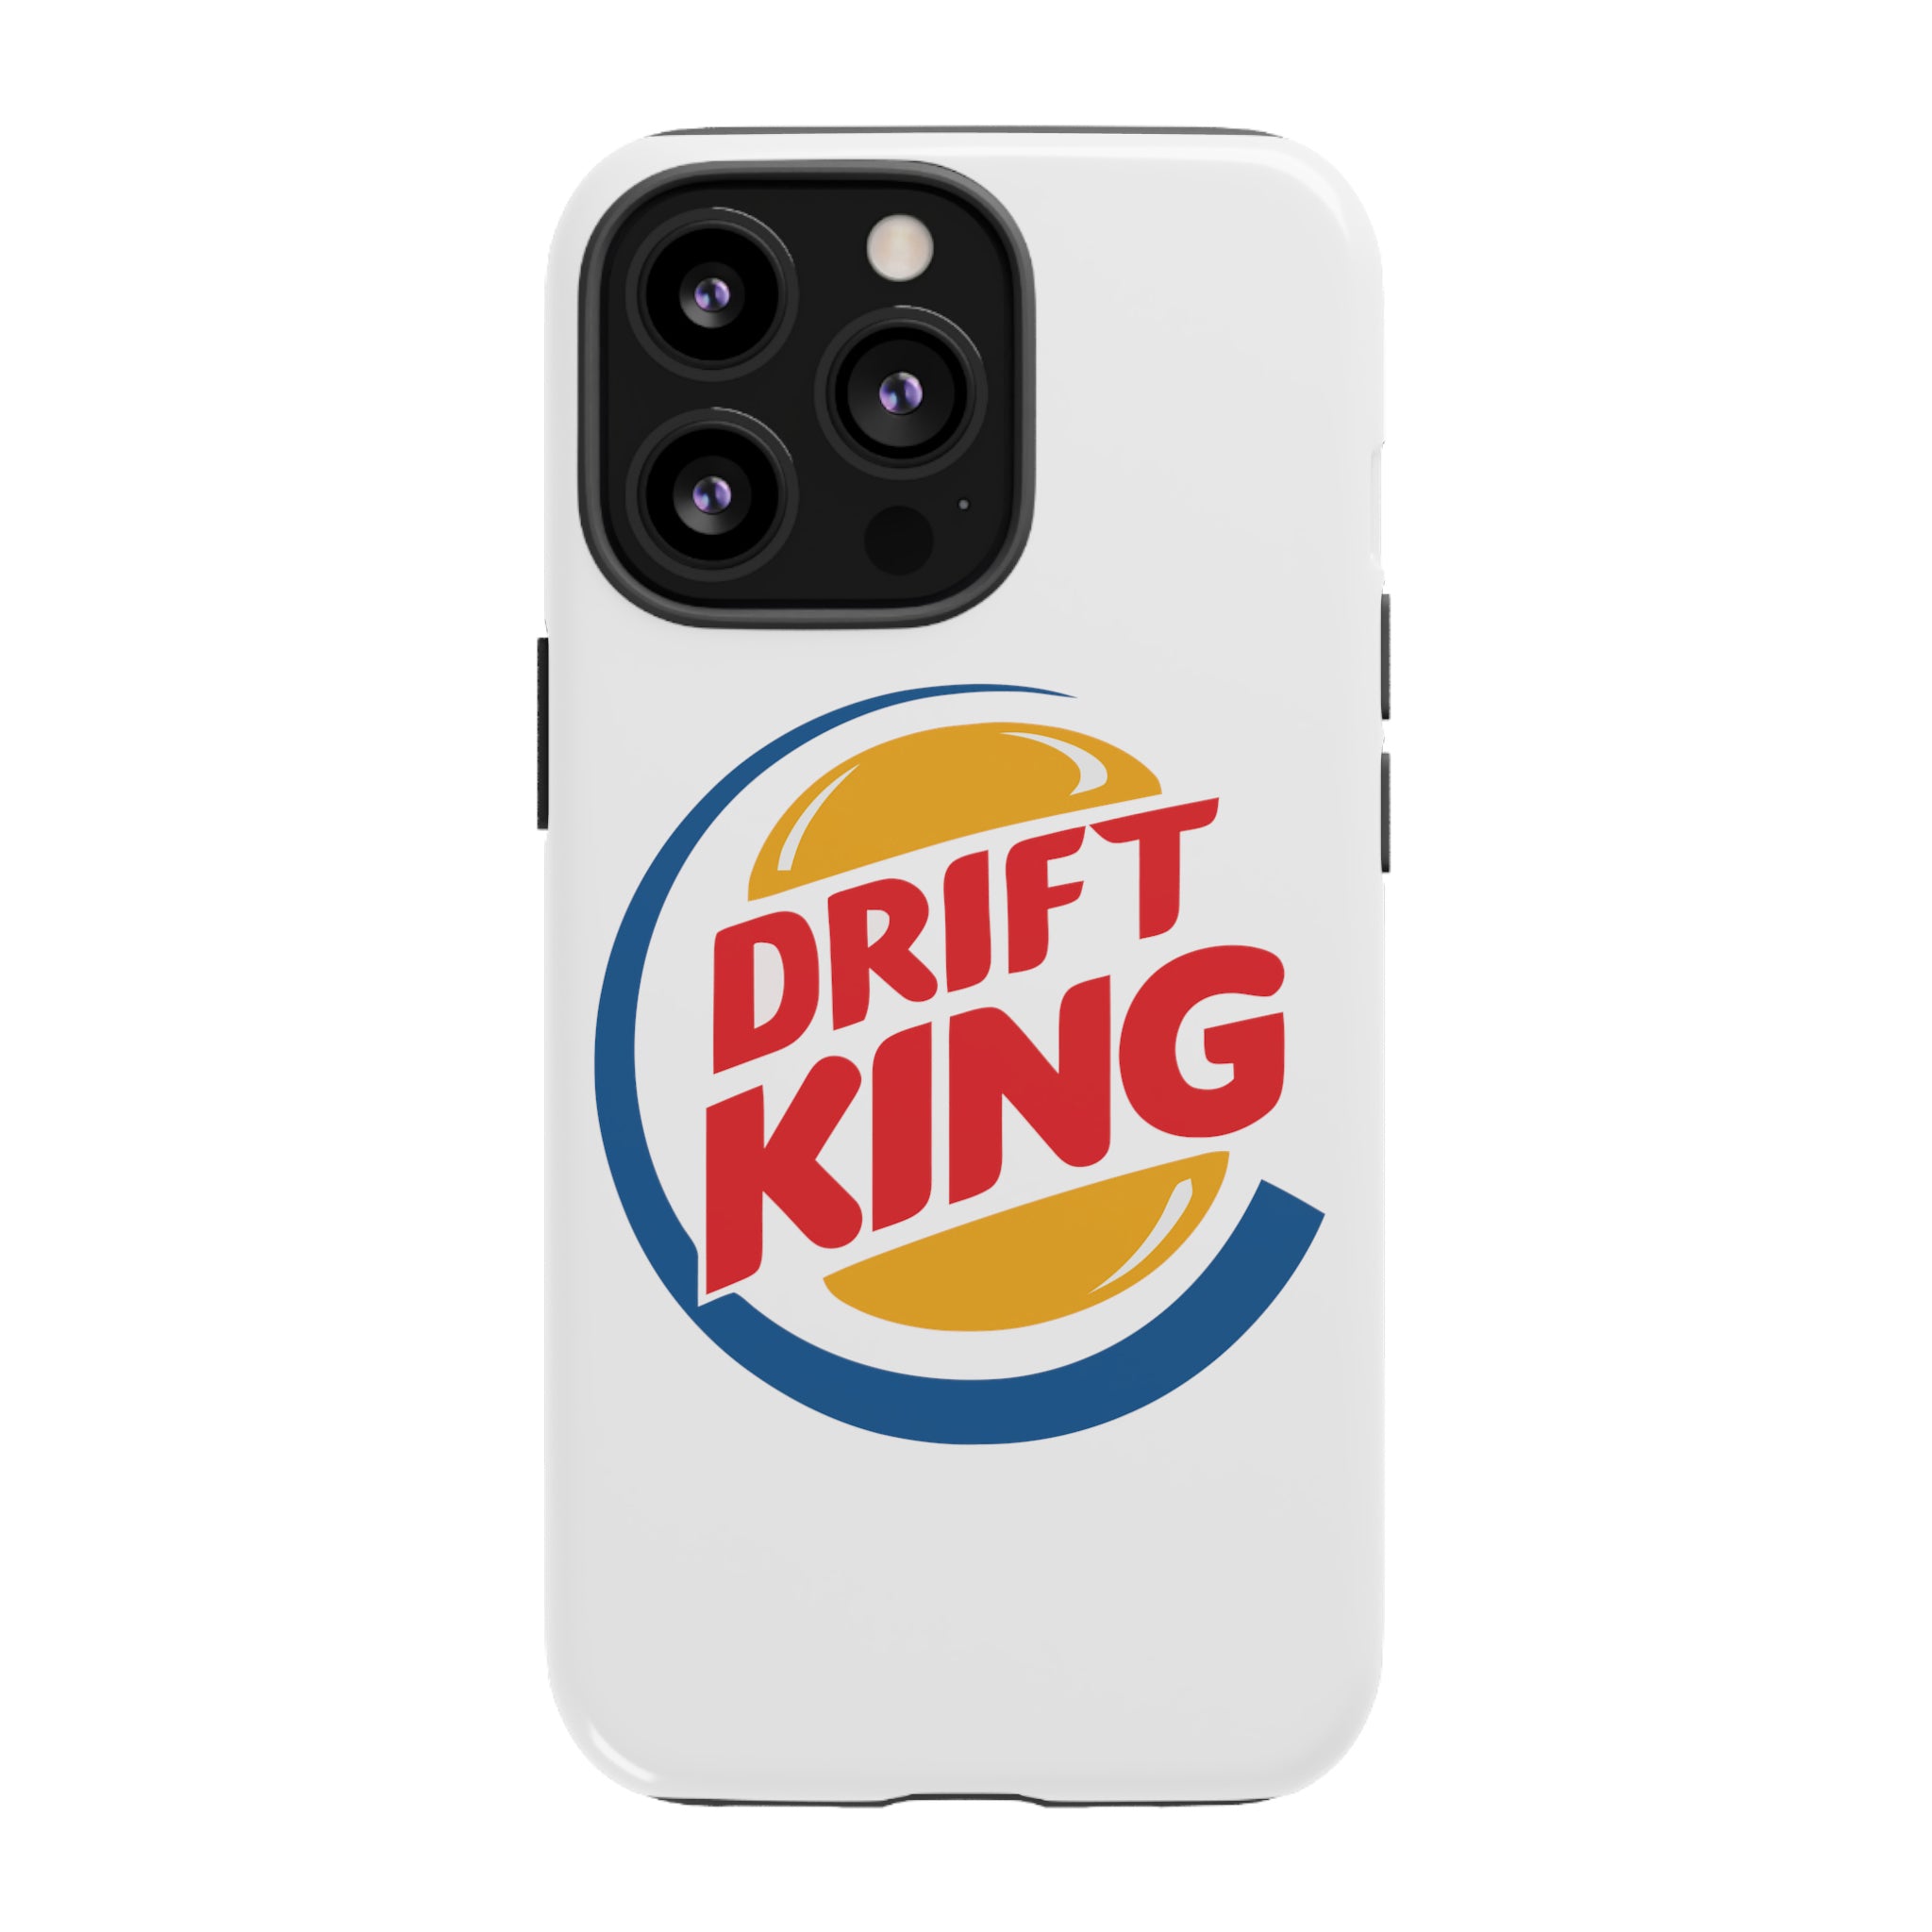 Drift King - Phone Case